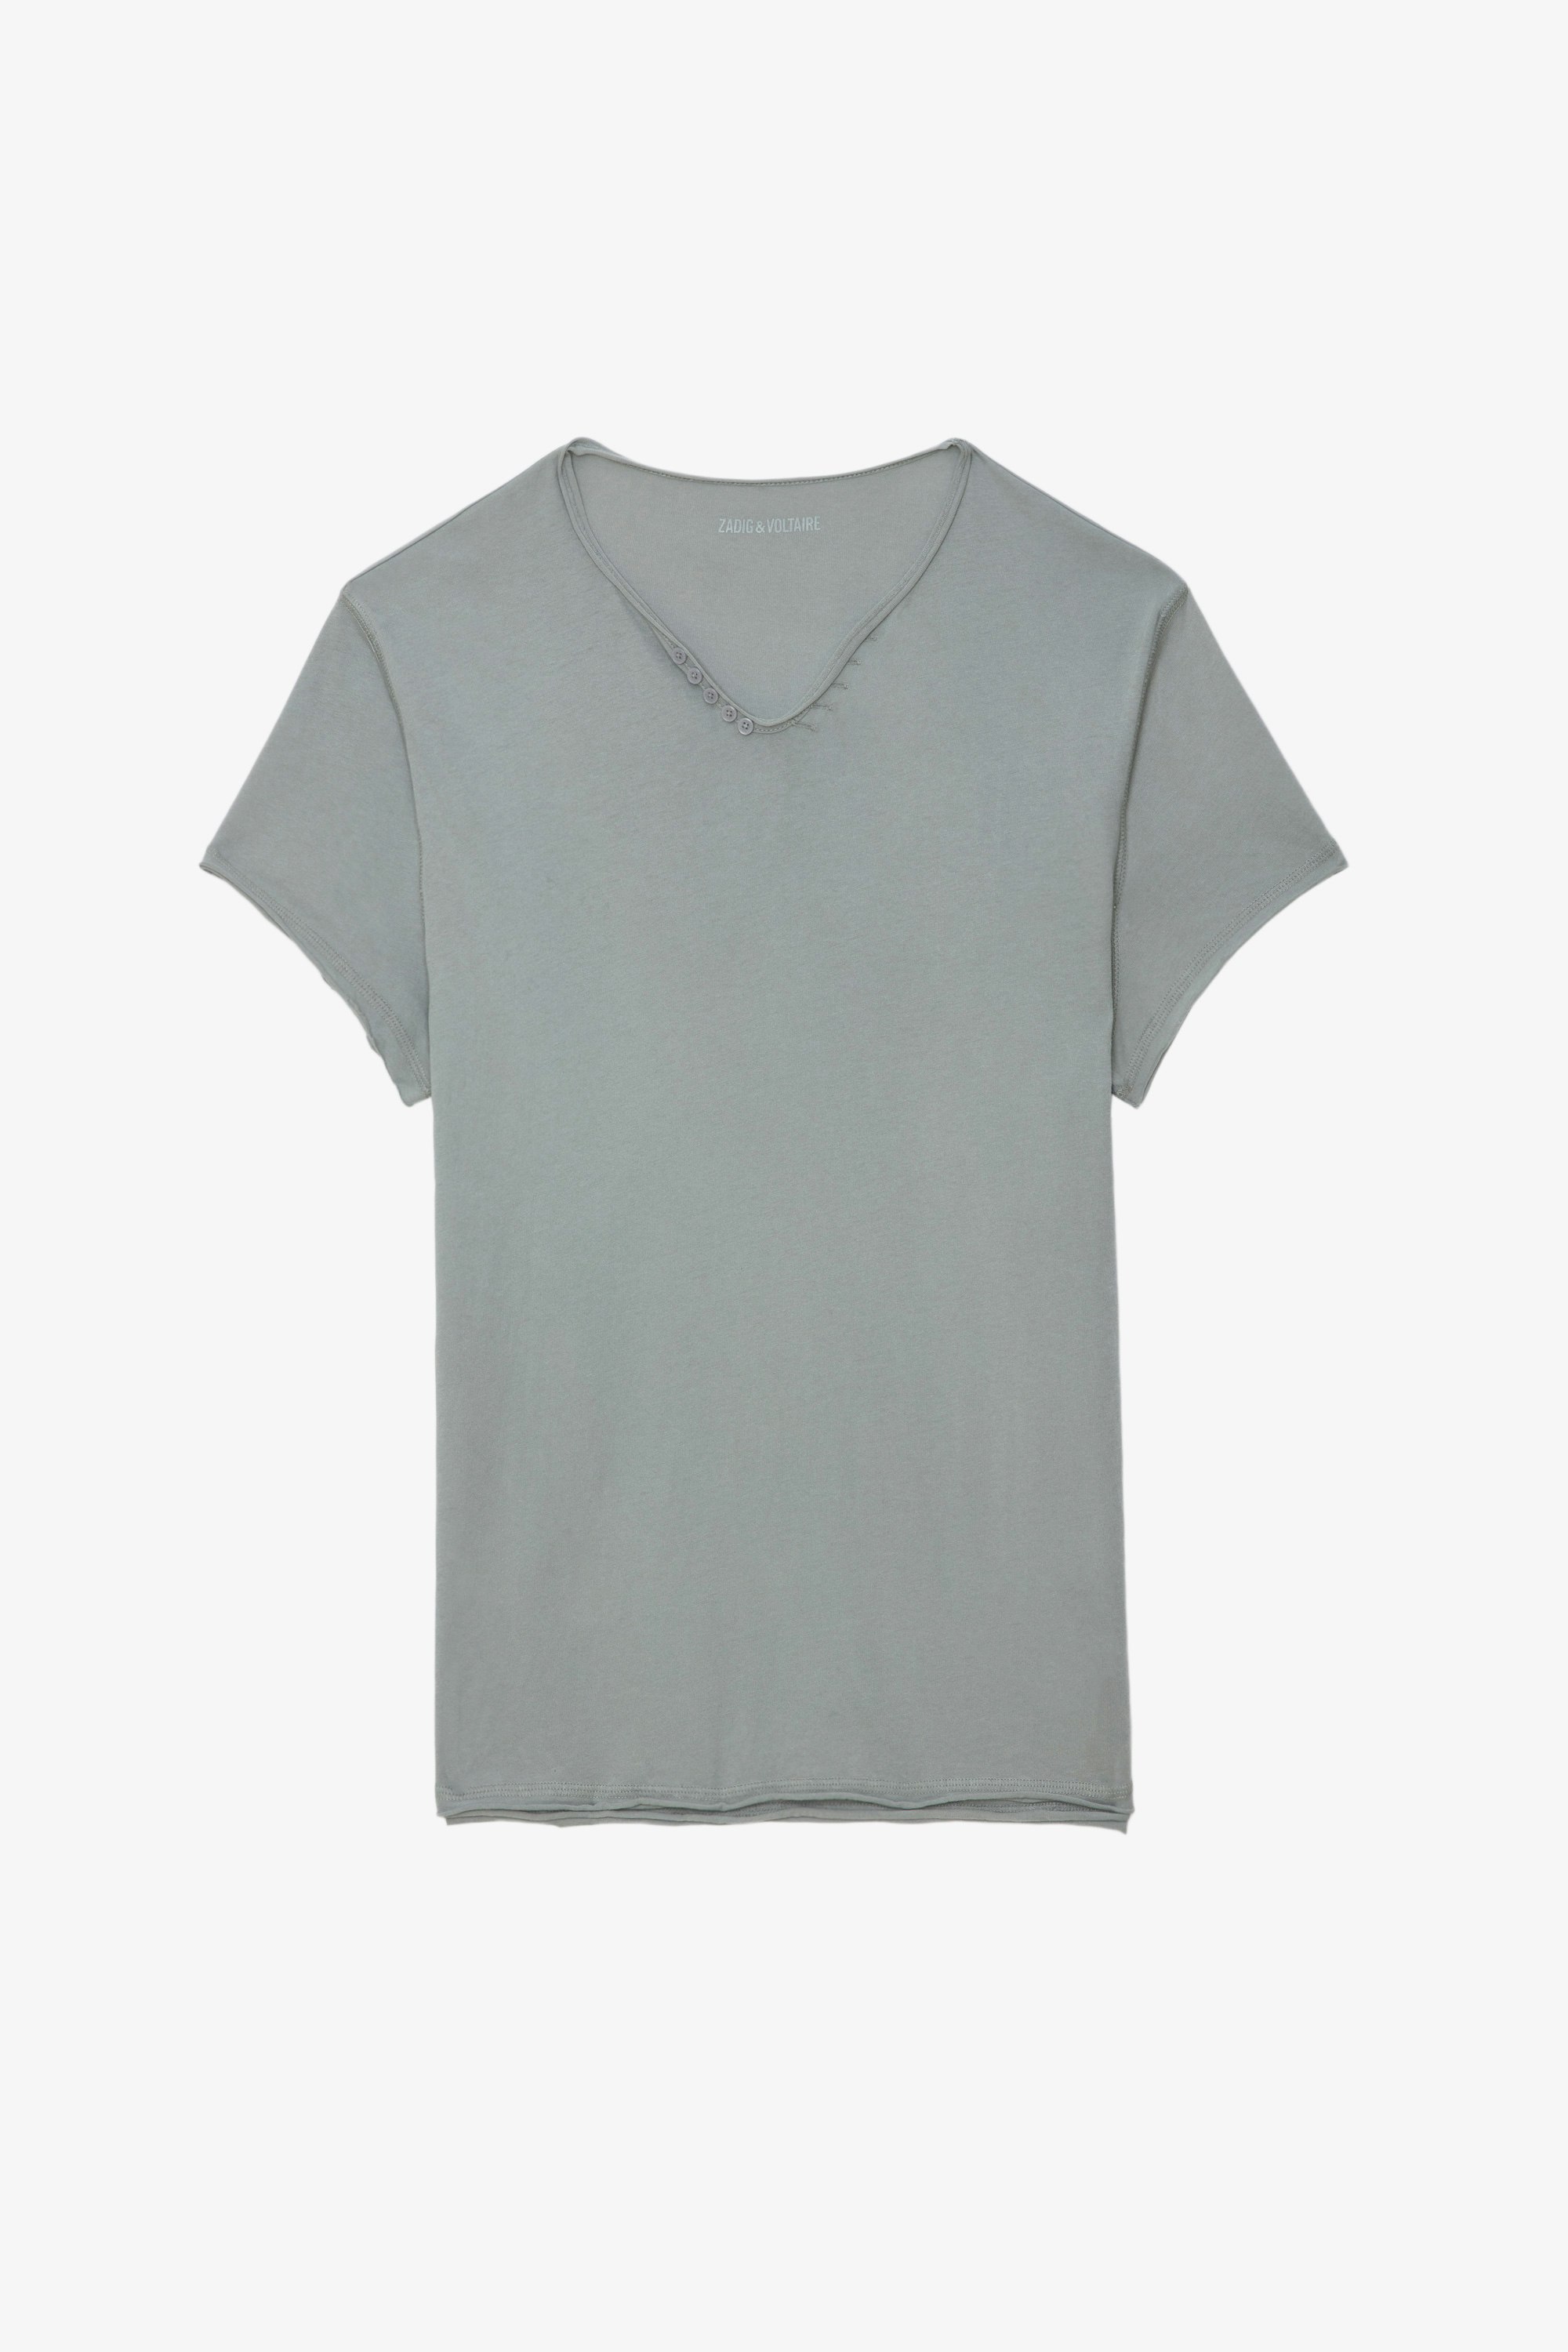 Monastir Arrow Henley T-shirt - Grey organic cotton Henley T-shirt with short sleeves and “No Heart No Art” embroidery.